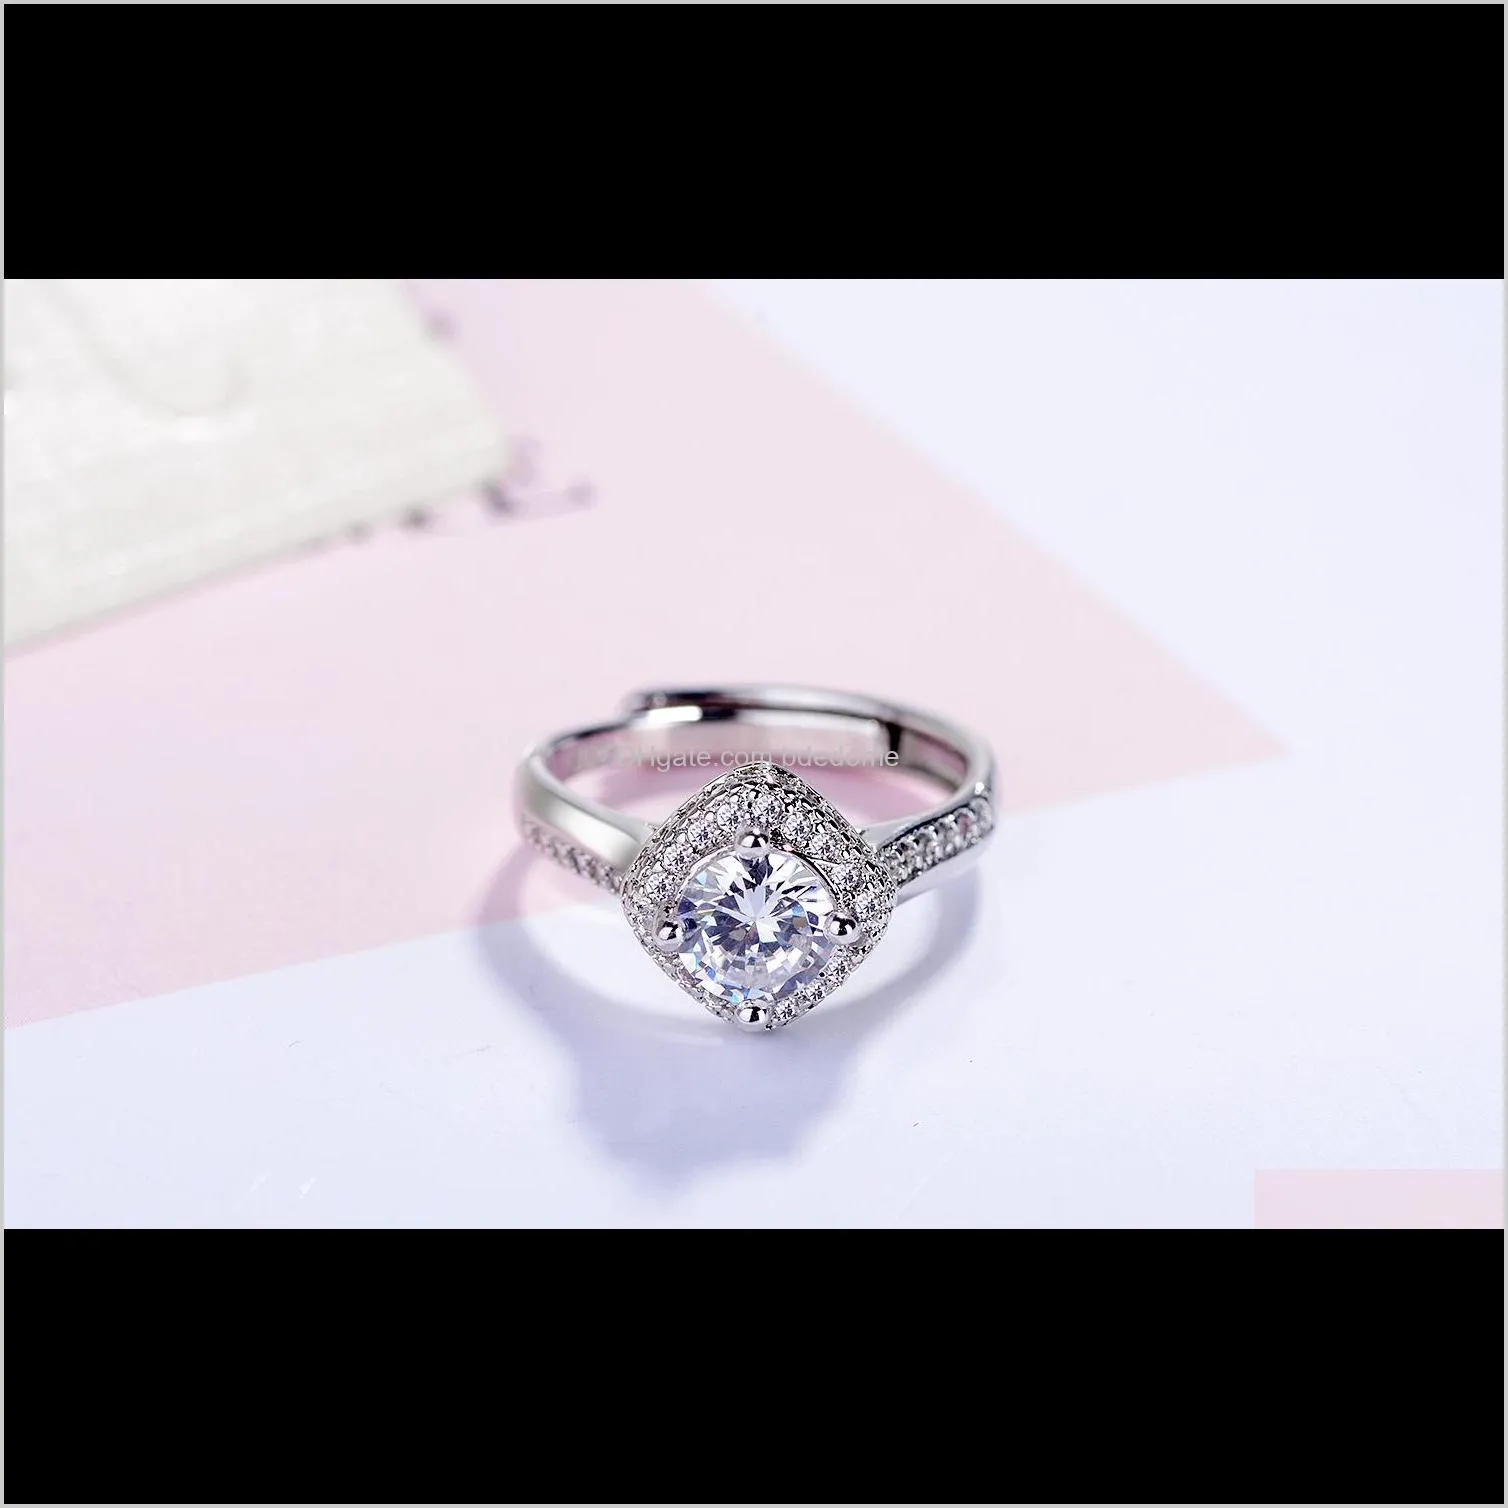 brass ring with white bigger size zircon around small setting imitation rhodium plated woman gift adjust circle size